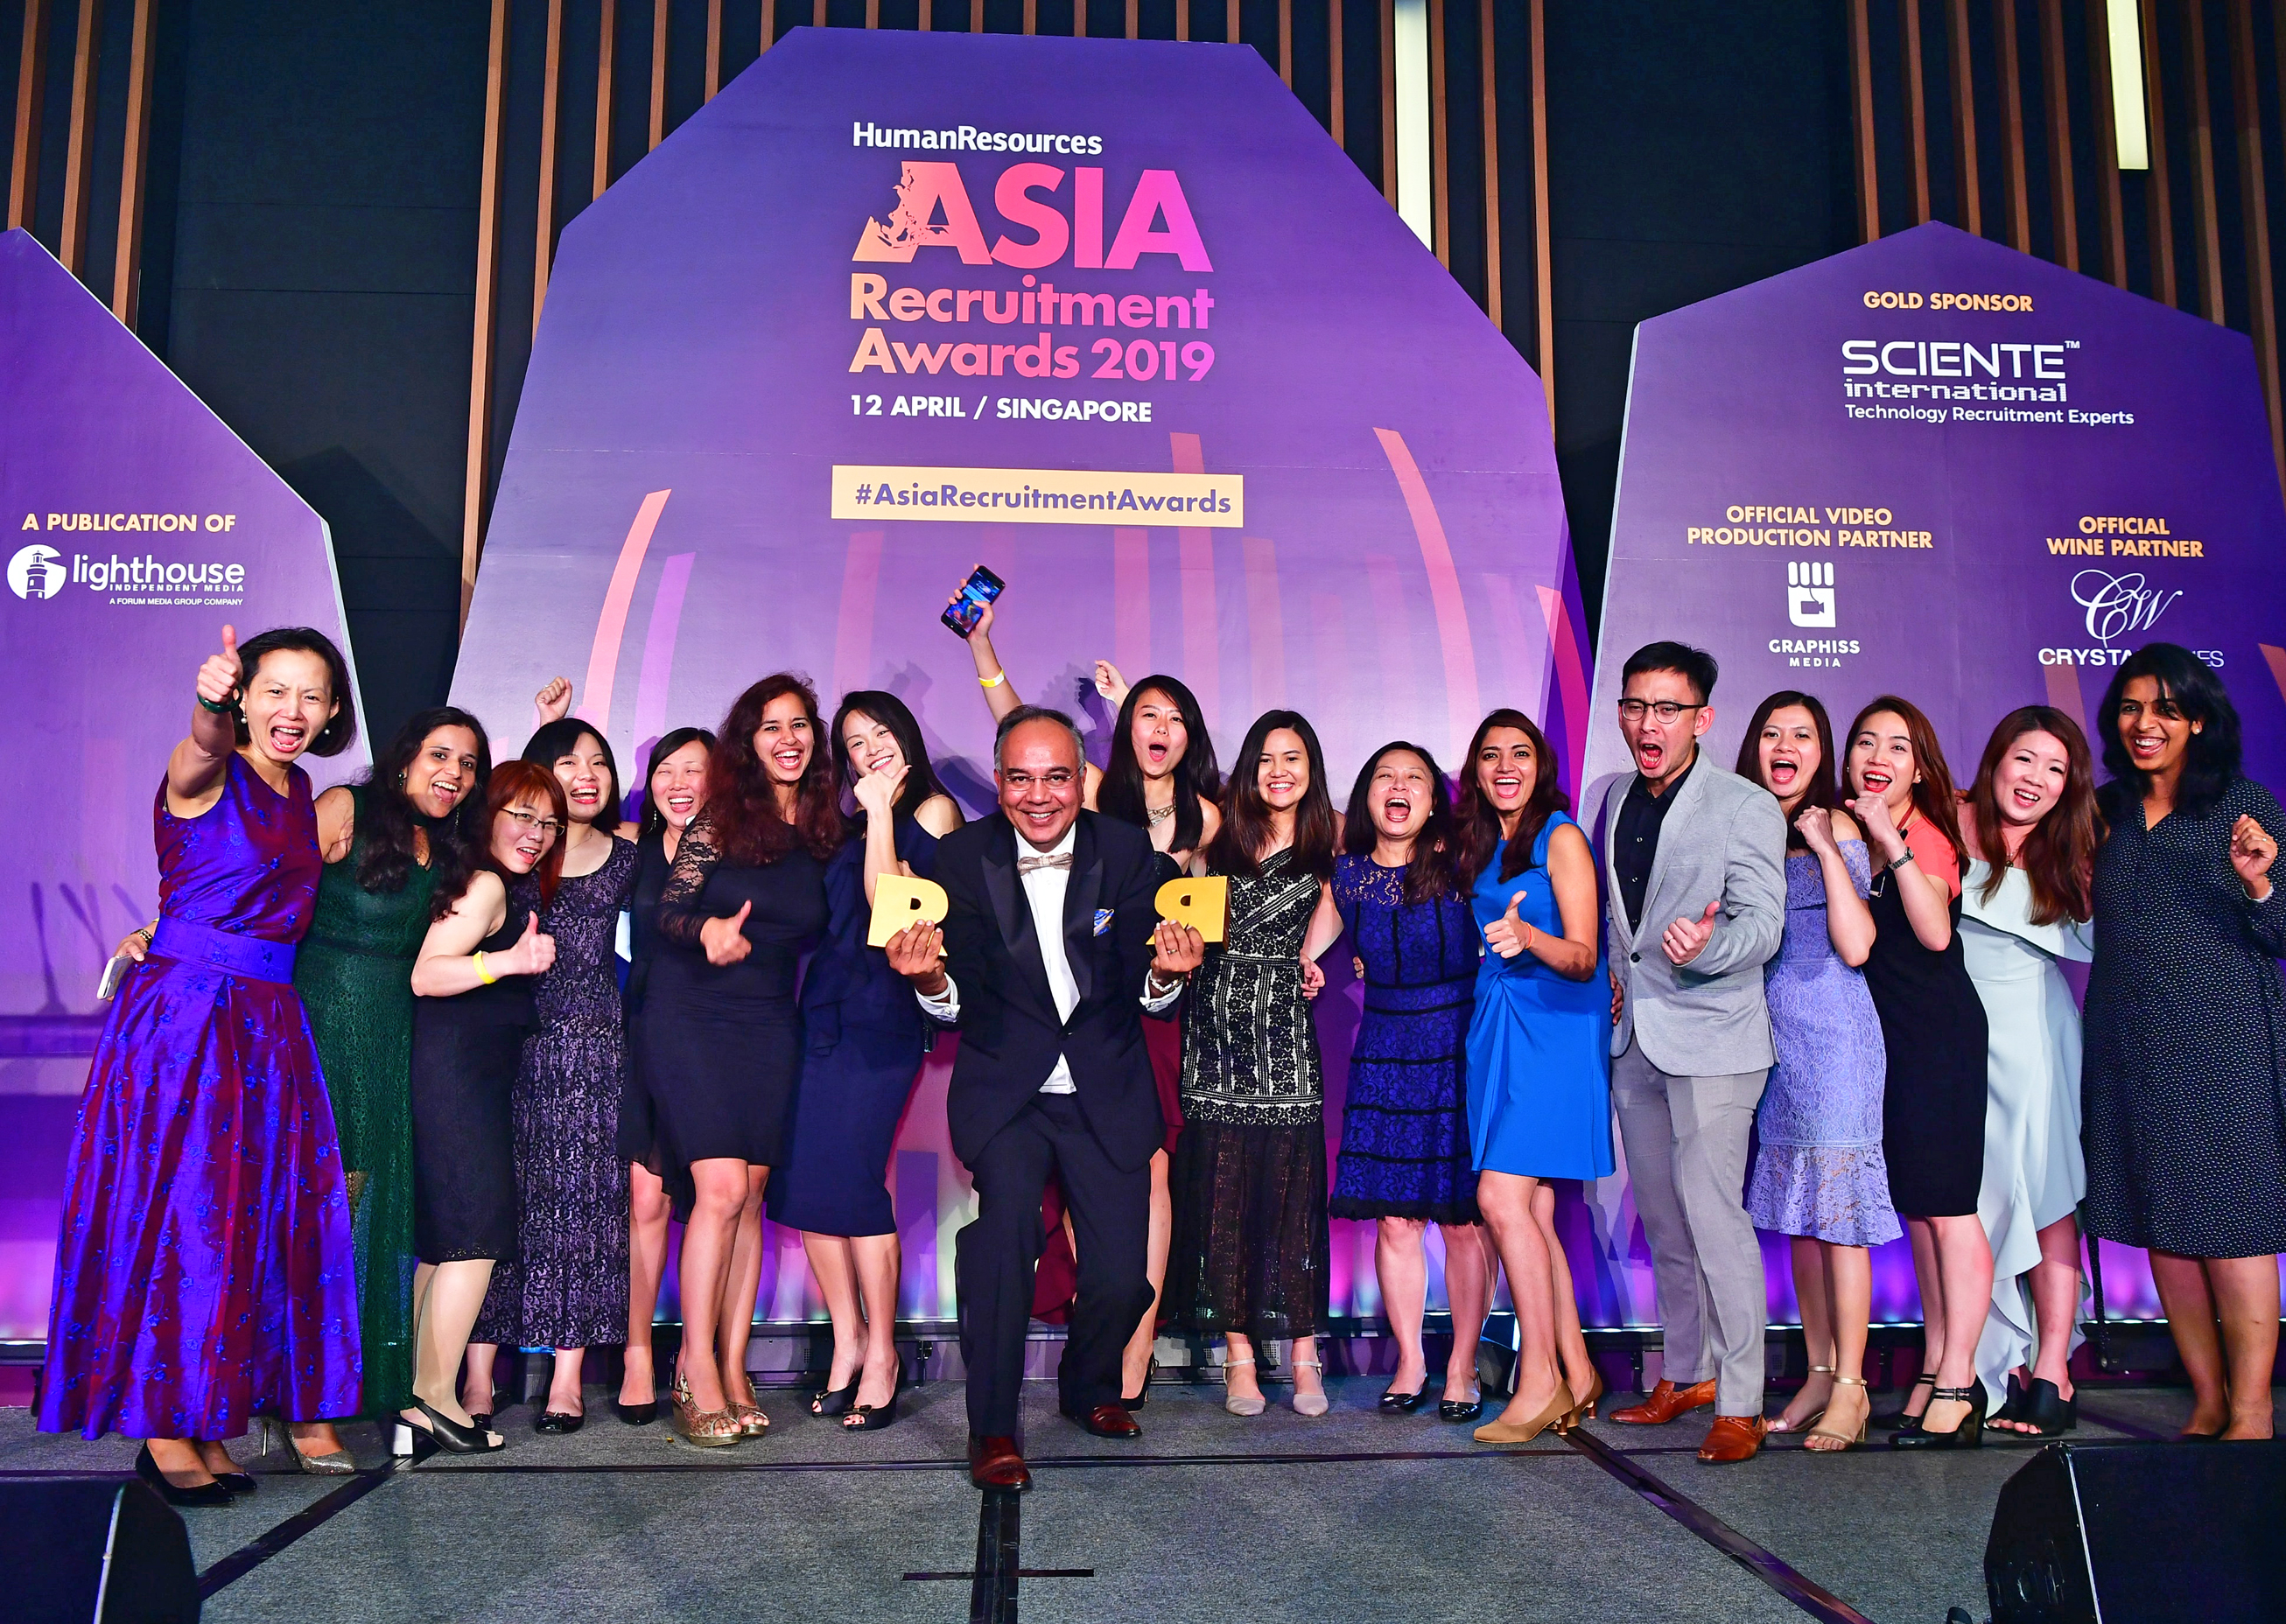 Sciente International wins again at HR Asia Recruitment Awards